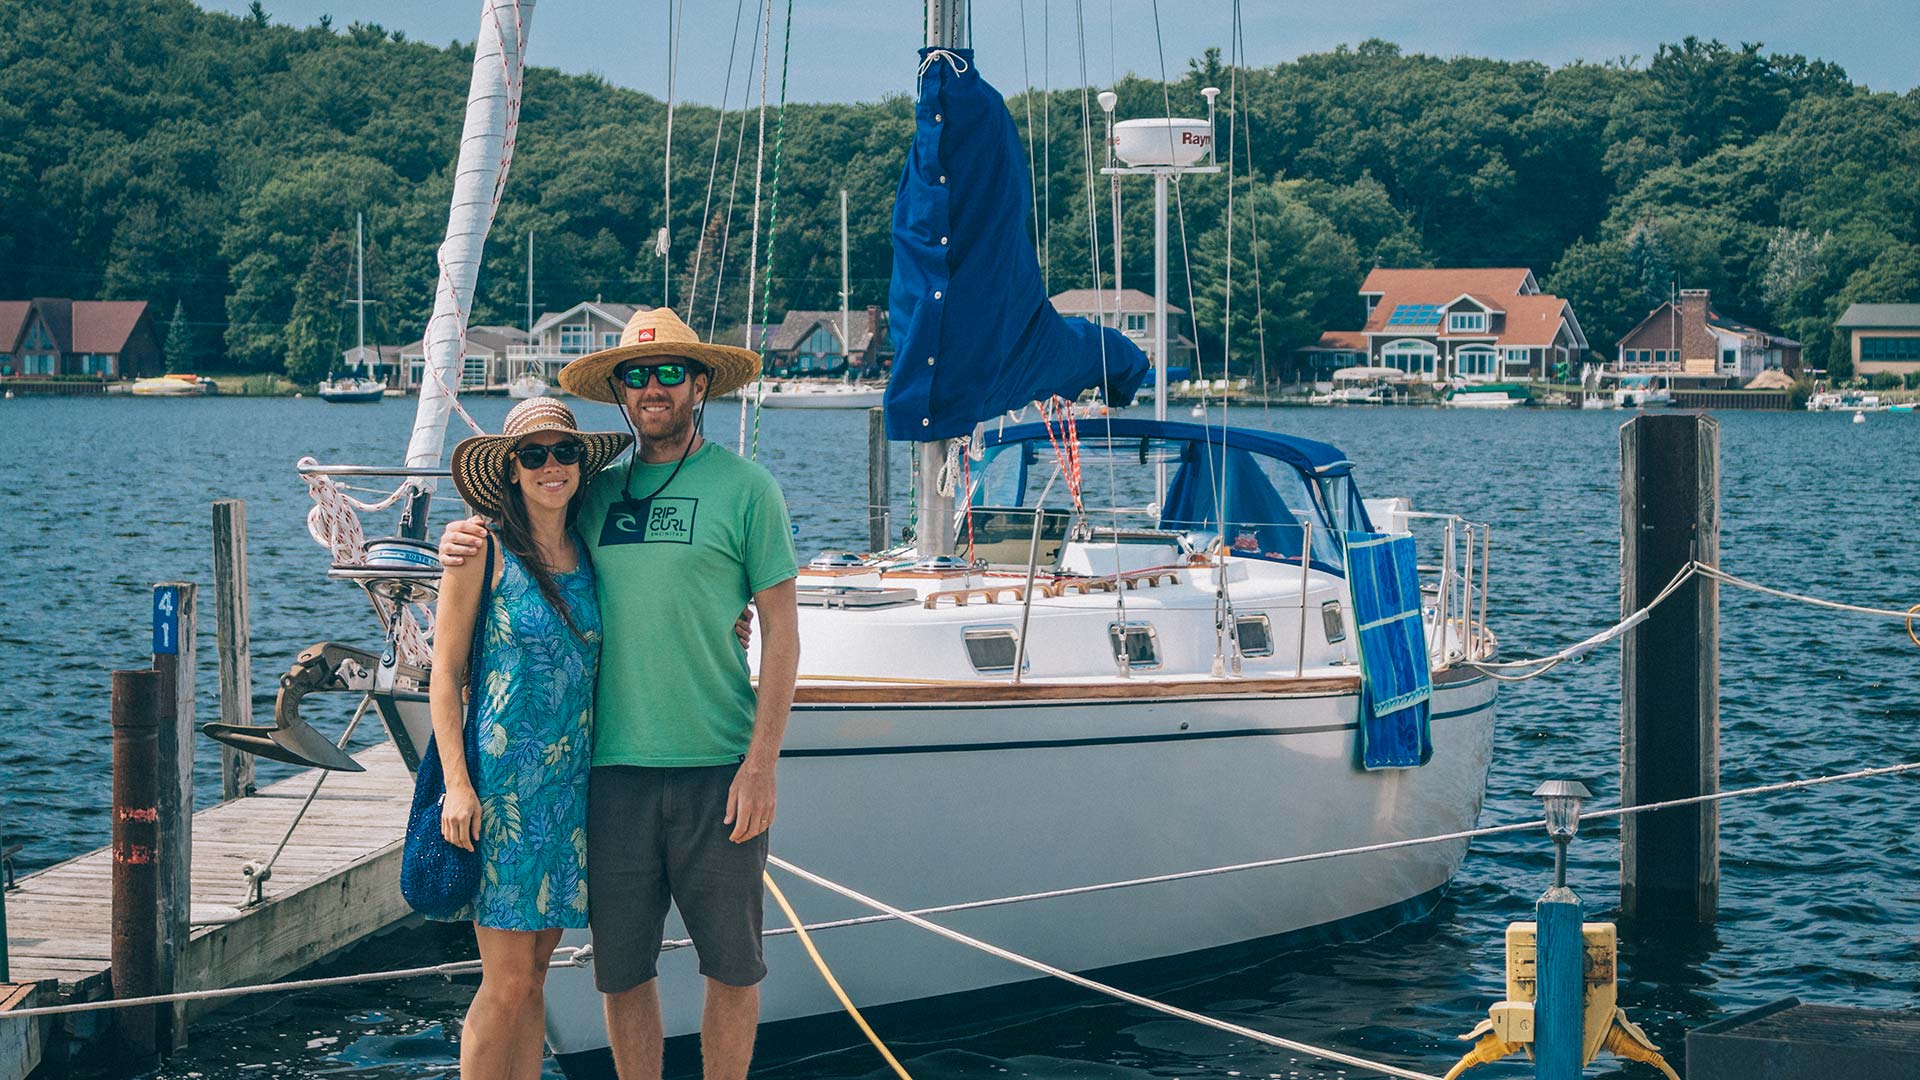 Kirk & Lauren with sv Soulianis after sailing across Lake Michigan.